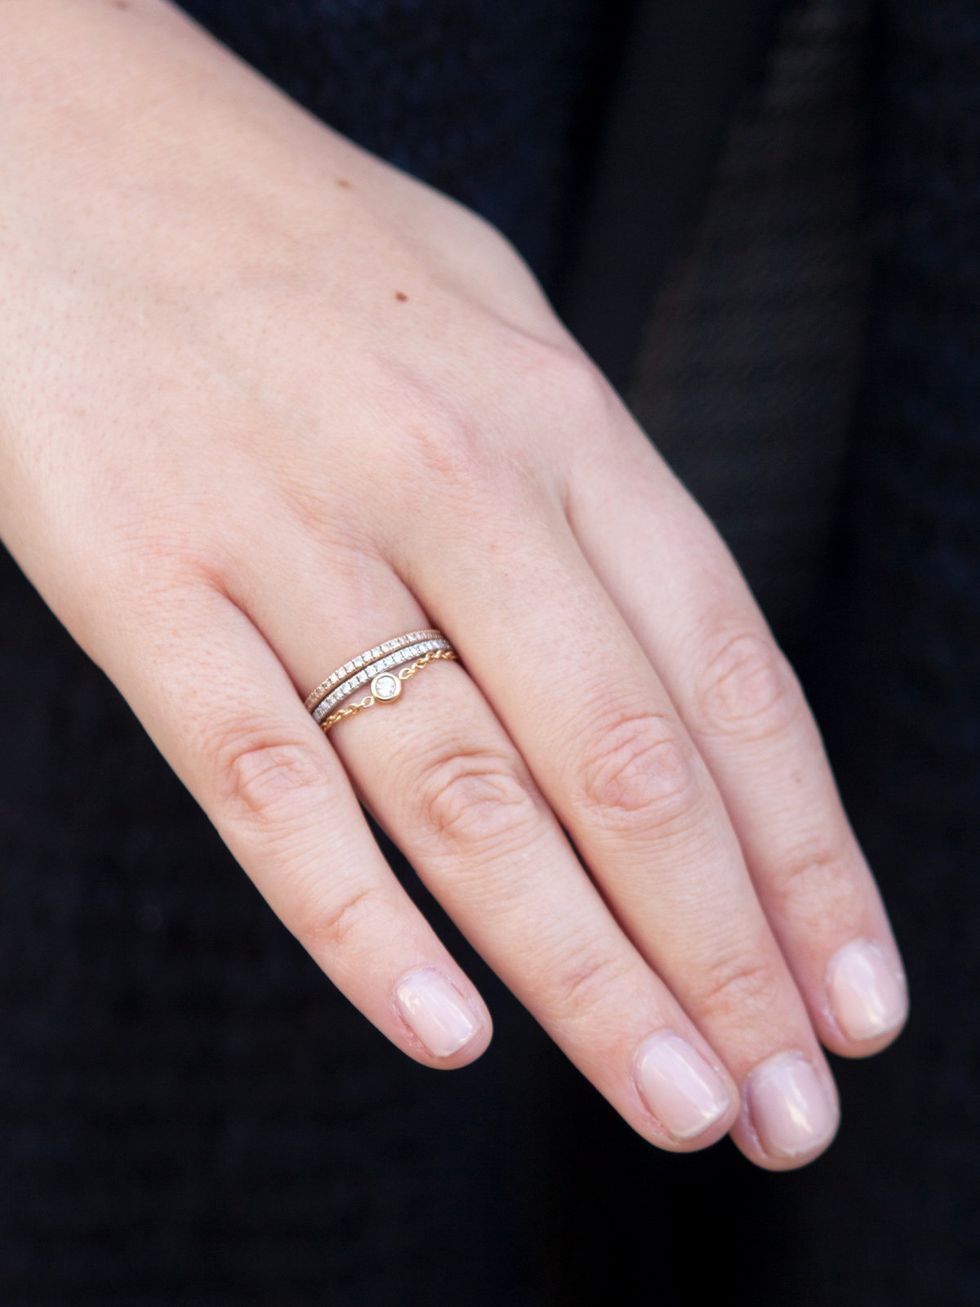 Finger, Jewellery, Skin, Nail, Engagement ring, Wrist, Pre-engagement ring, Wedding ring, Ring, Fashion accessory, 